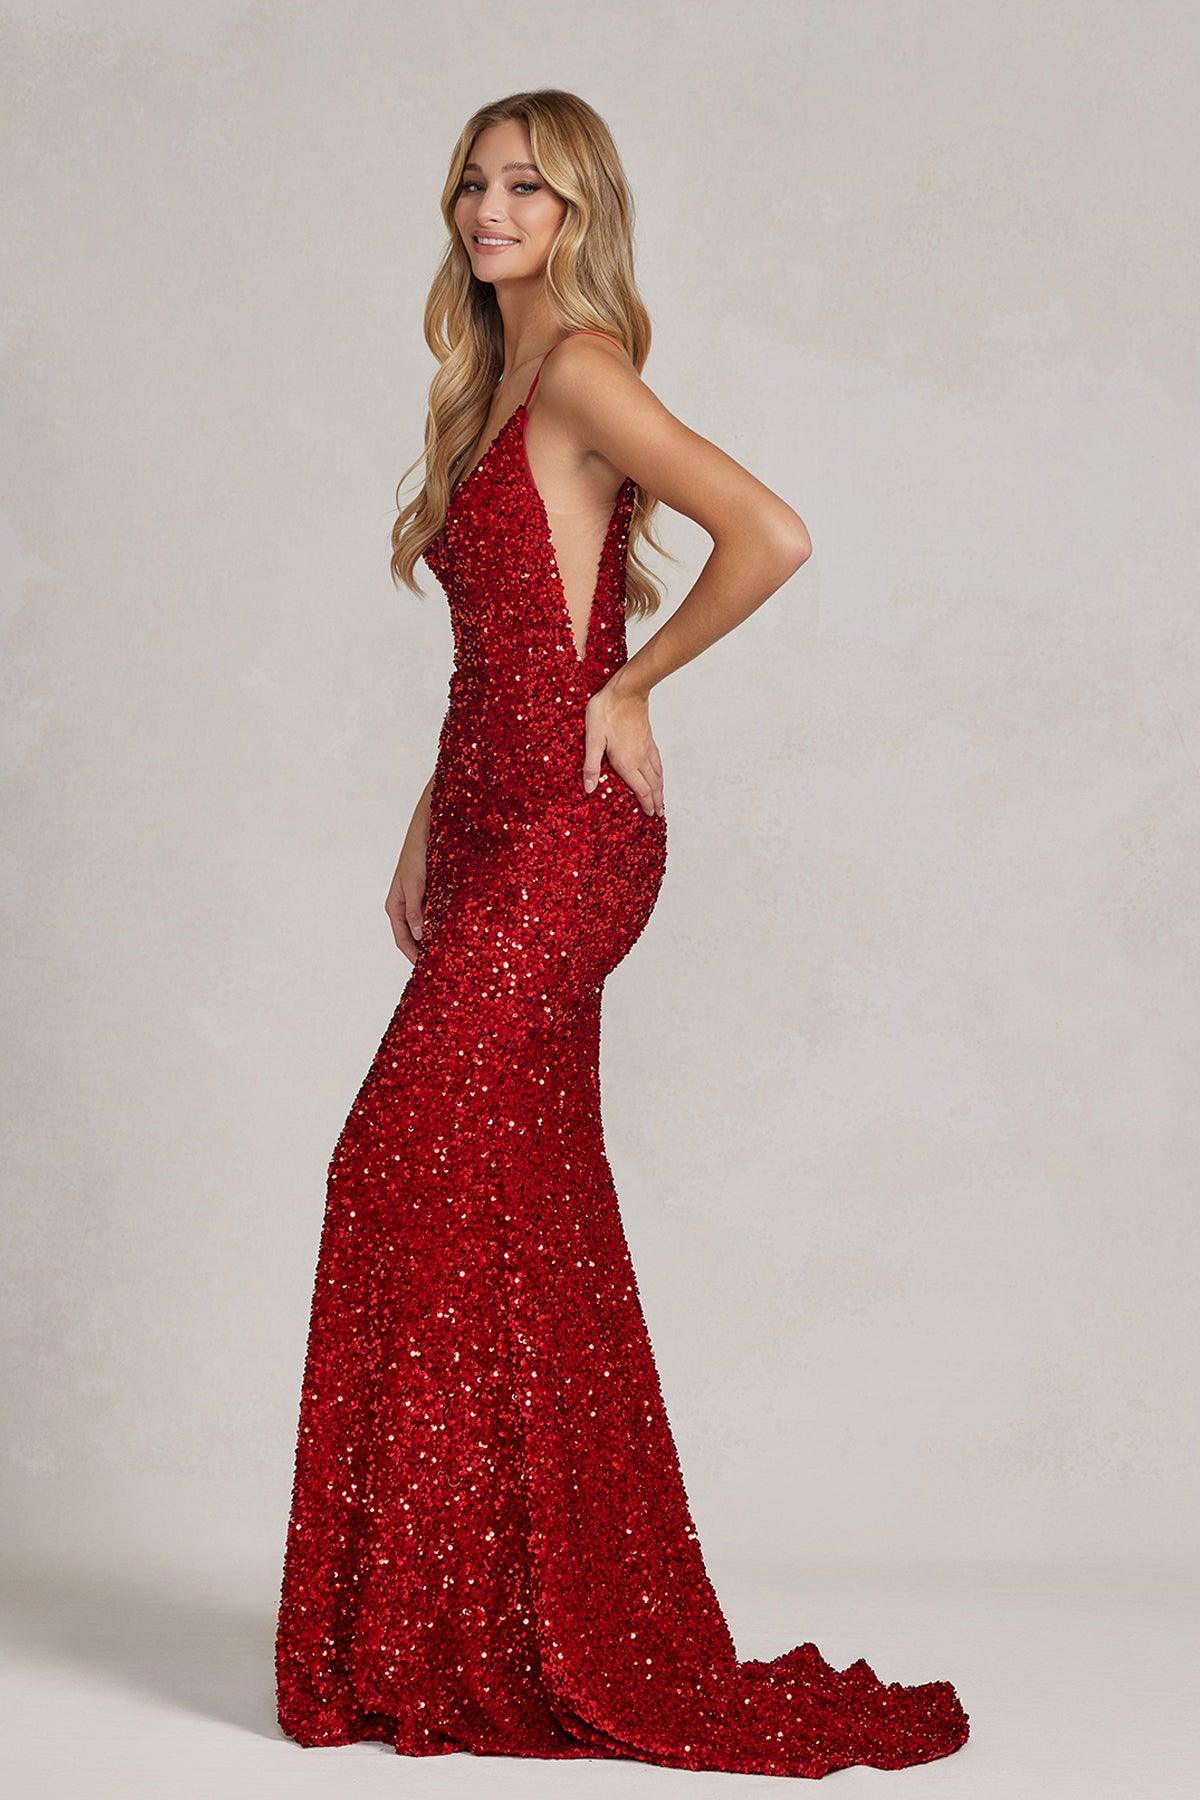 Nox Anabel G1146 Long One Shoulder Formal Prom Dress Fuchsia